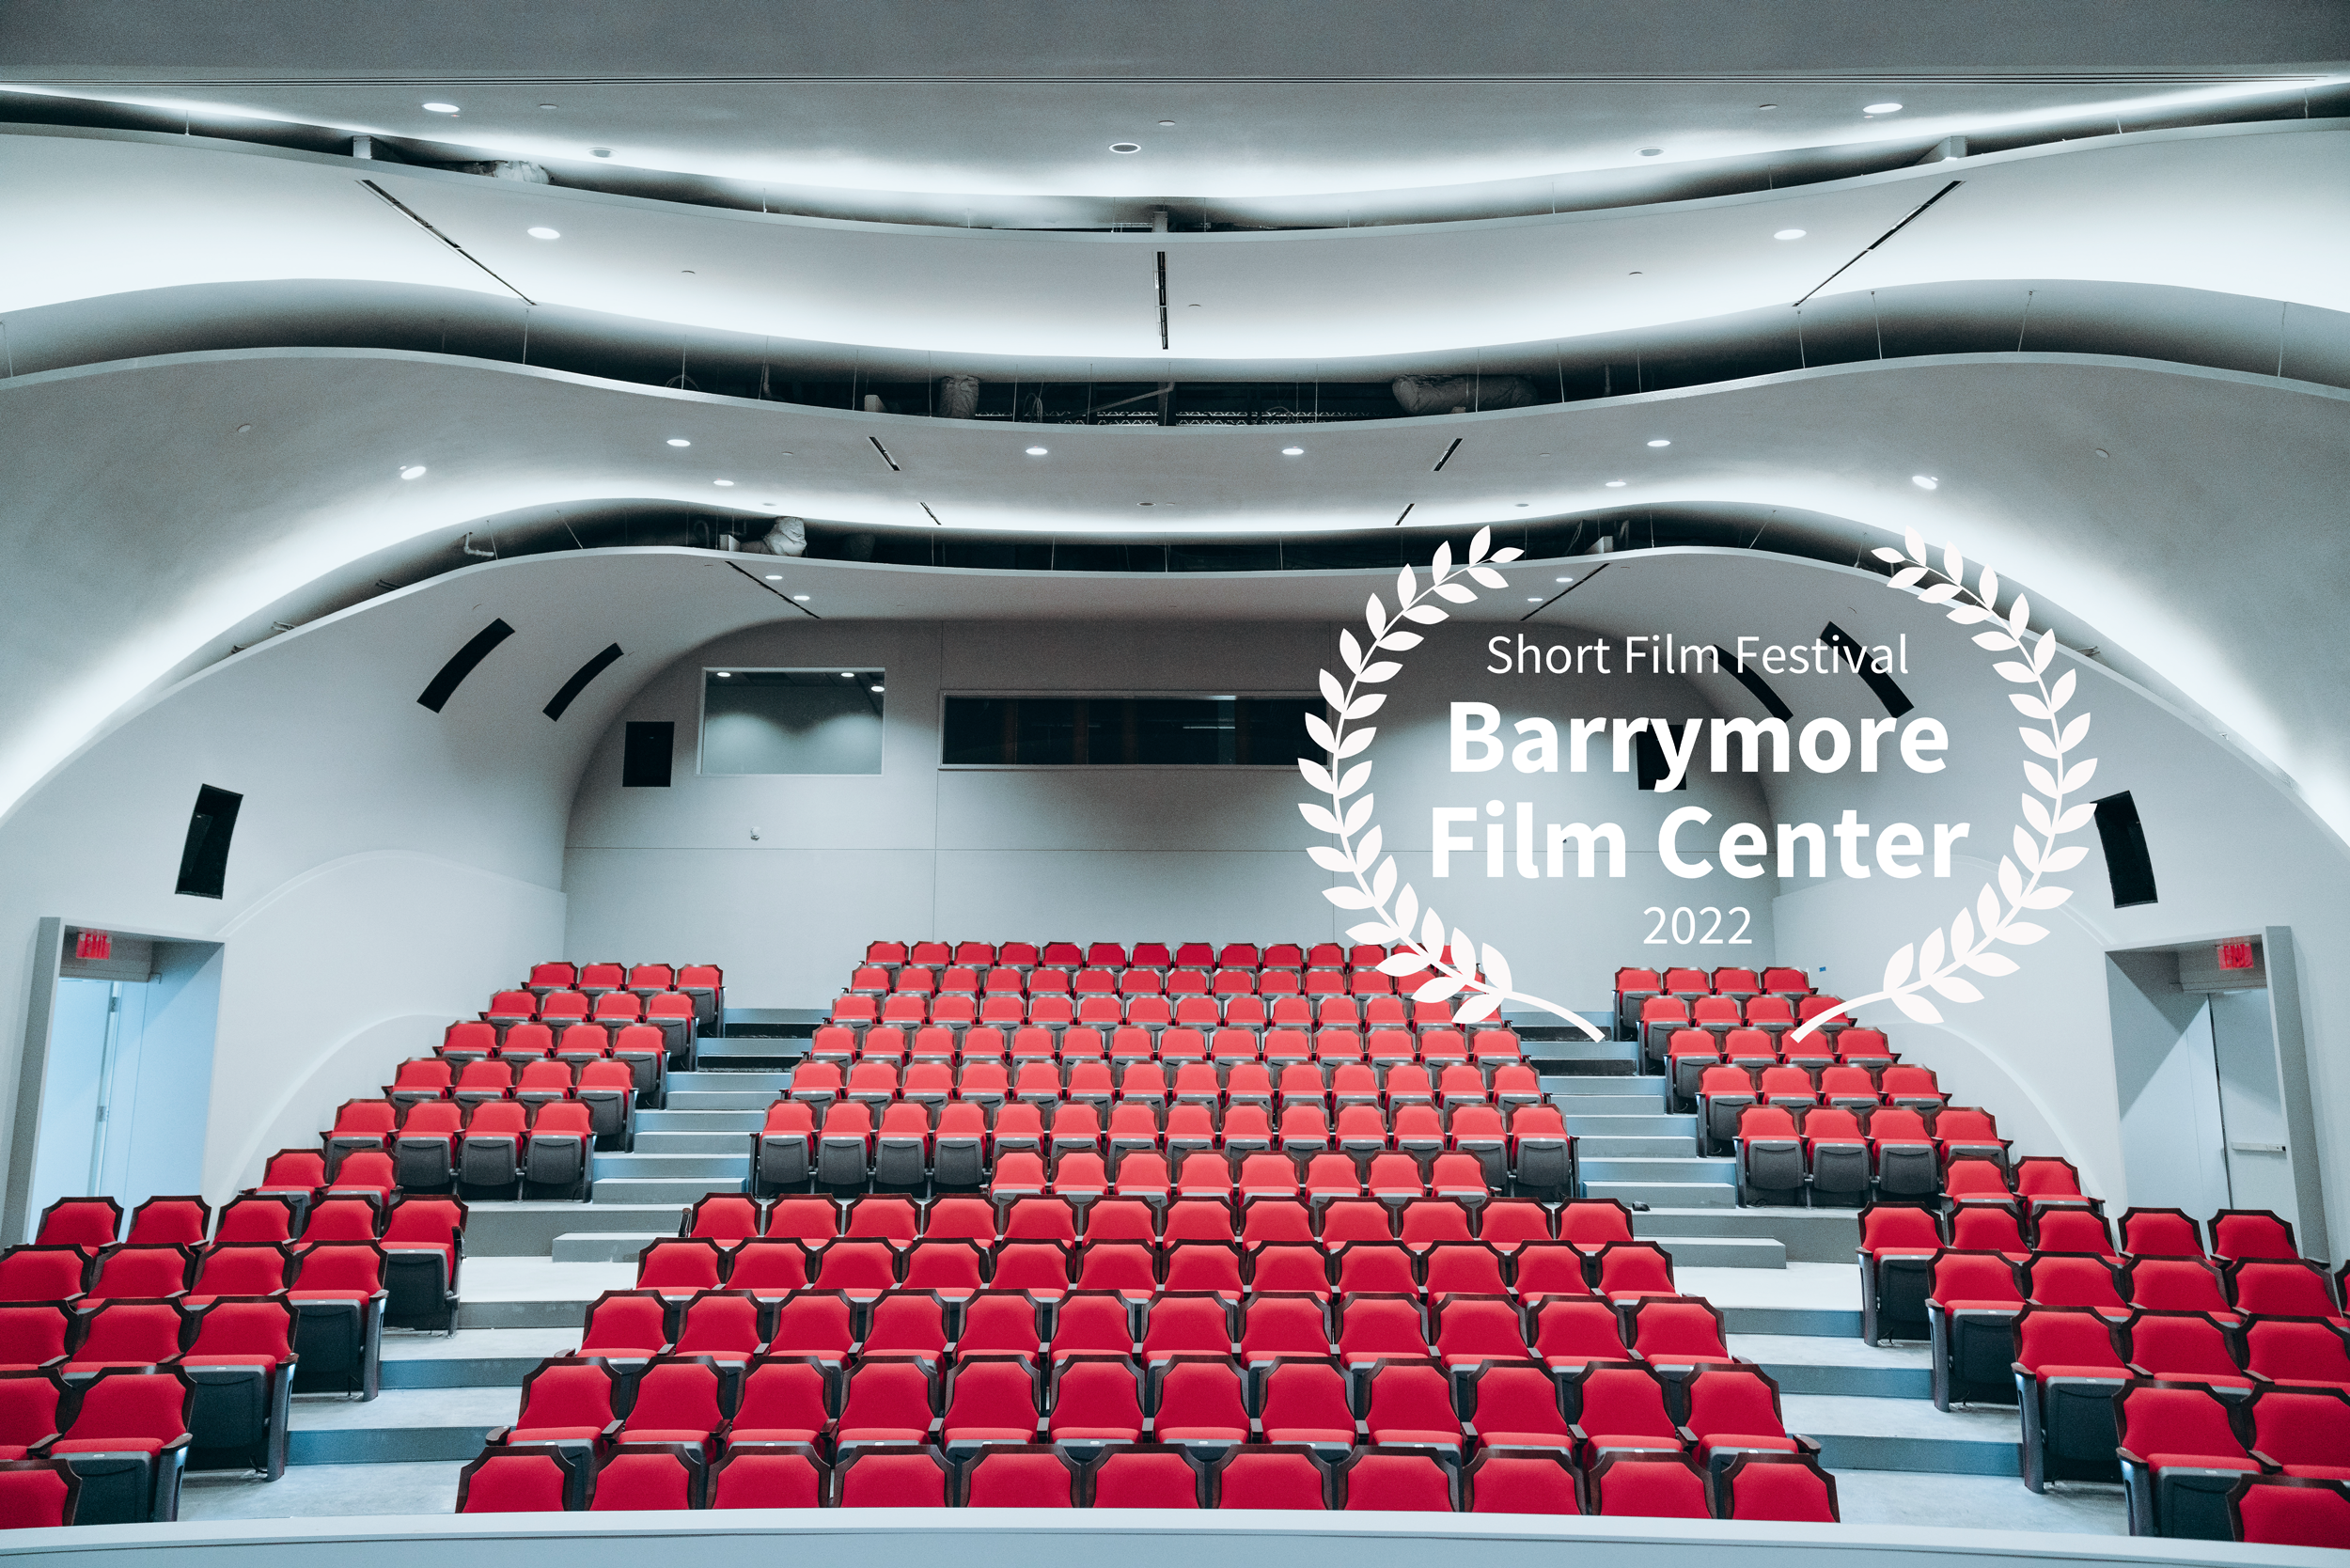 Barrymore Film Center